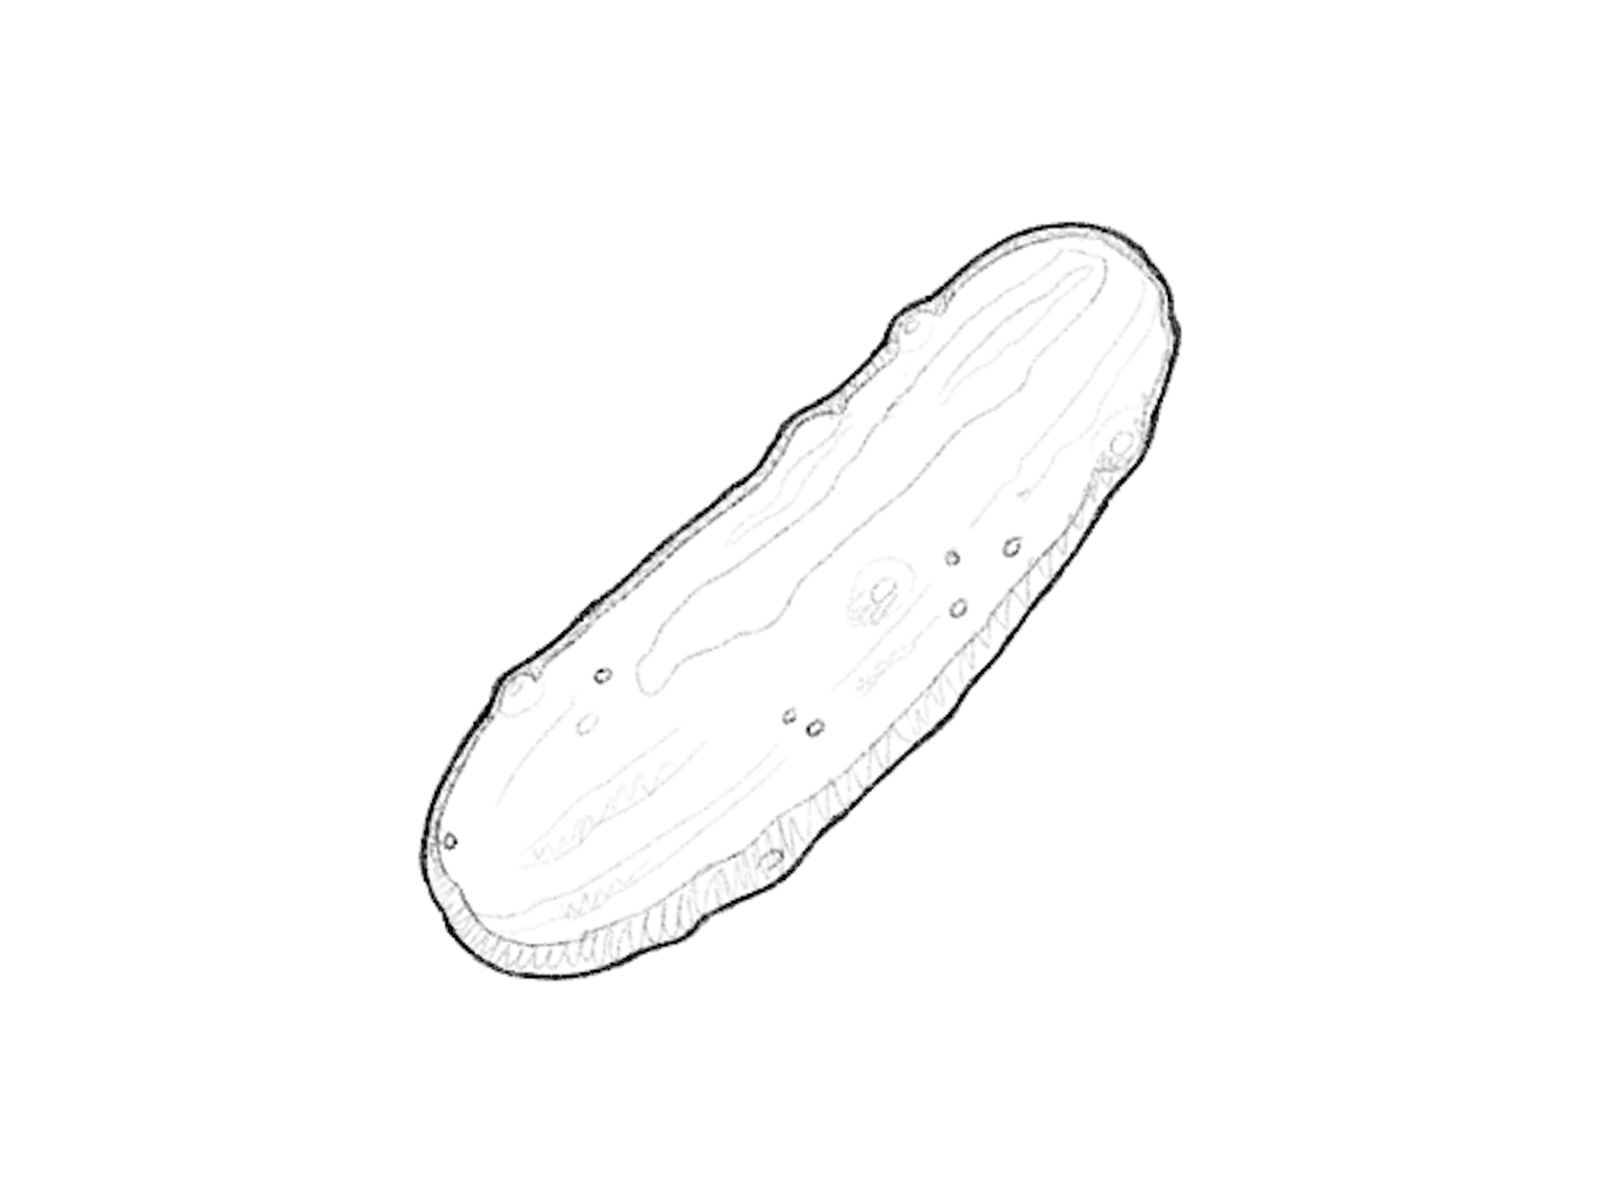 Cucumber Vector Illustration Hand Drawn Vegetable Cartoon Art Royalty Free  Cliparts Vetores e Ilustrações Stock Image 140184527